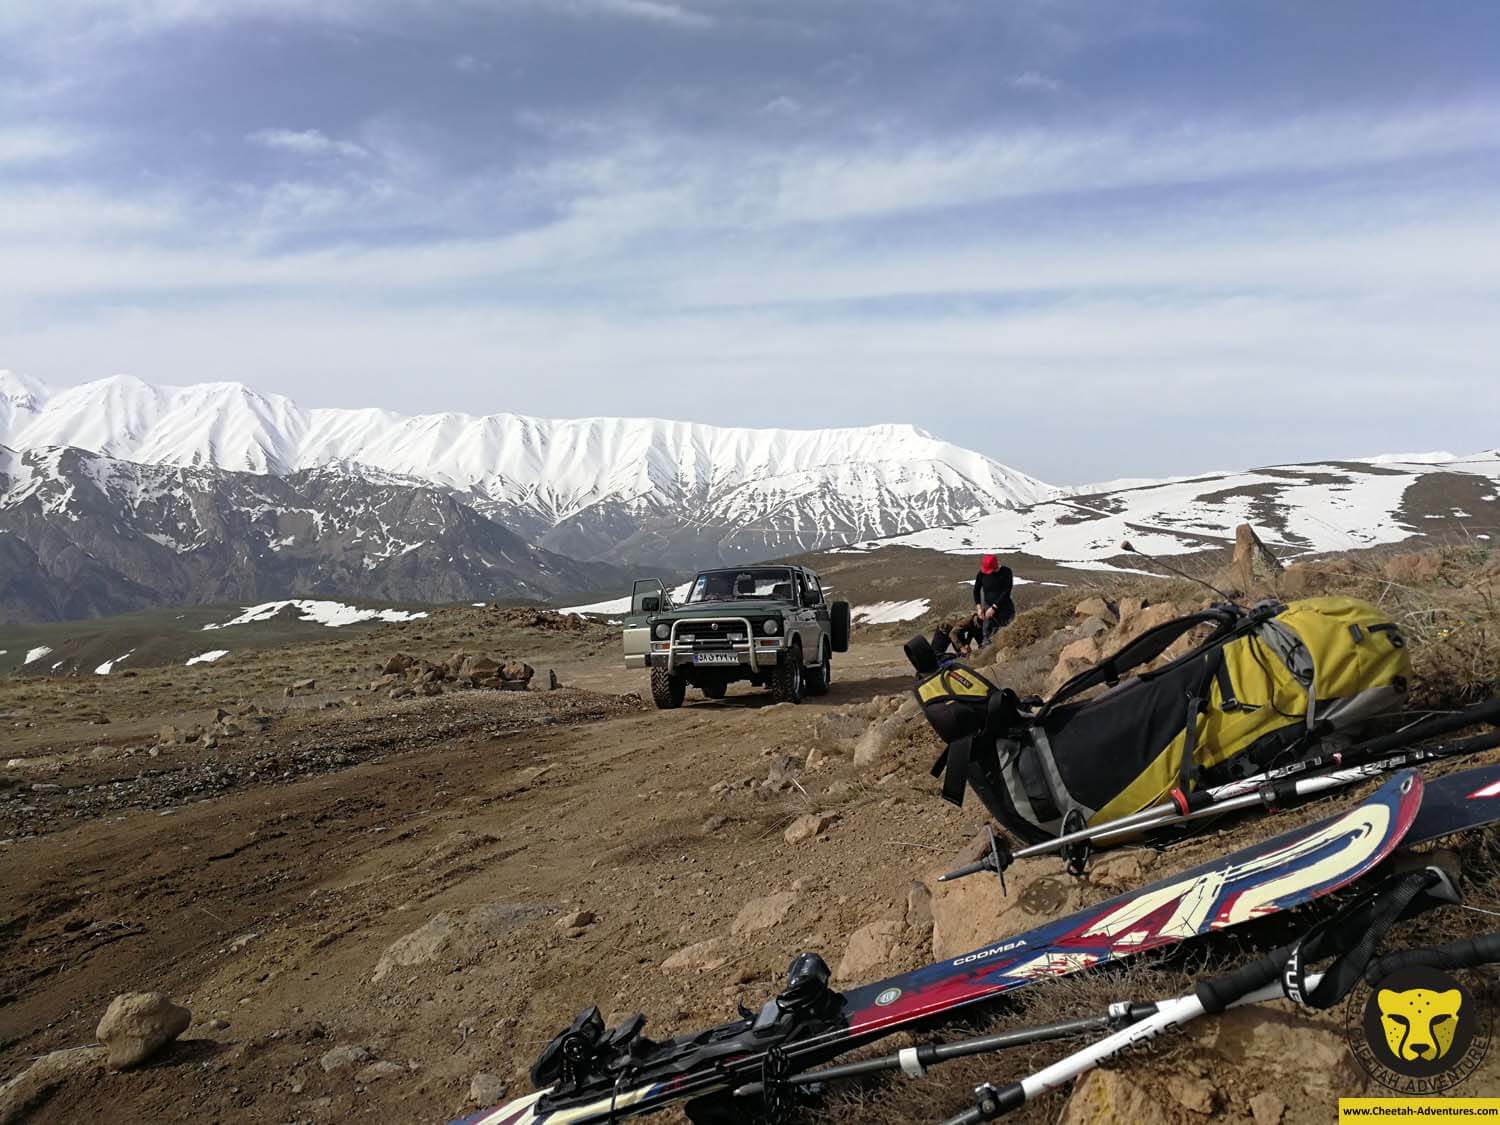 5-1 Transfer close to Goosfandsara (3100m), Doberar Range at the background, Damavand Ski Touring